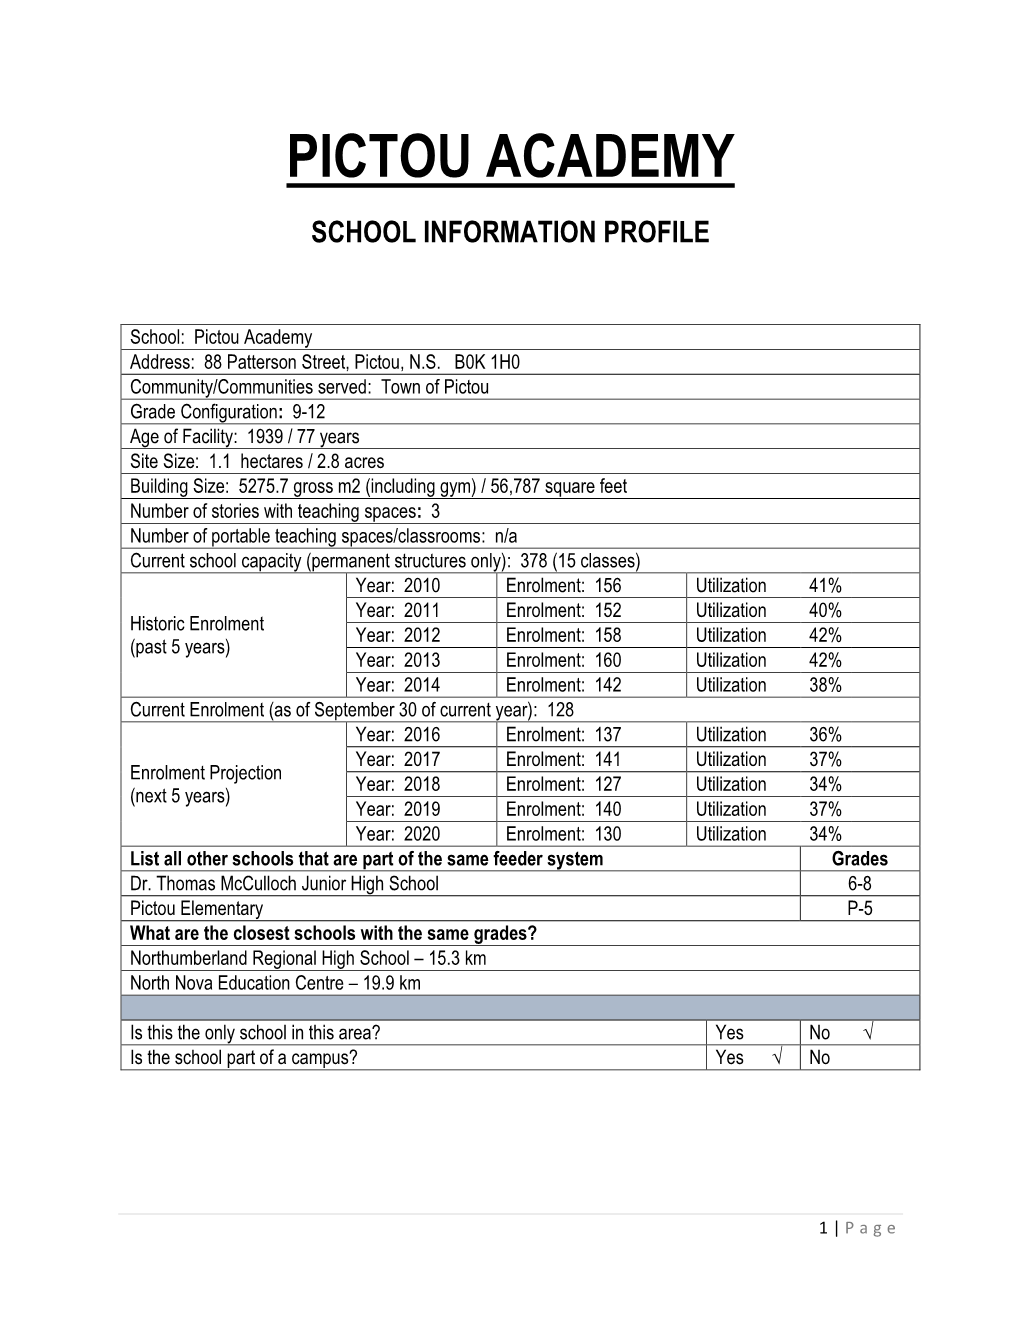 Pictou Academy School Information Profile